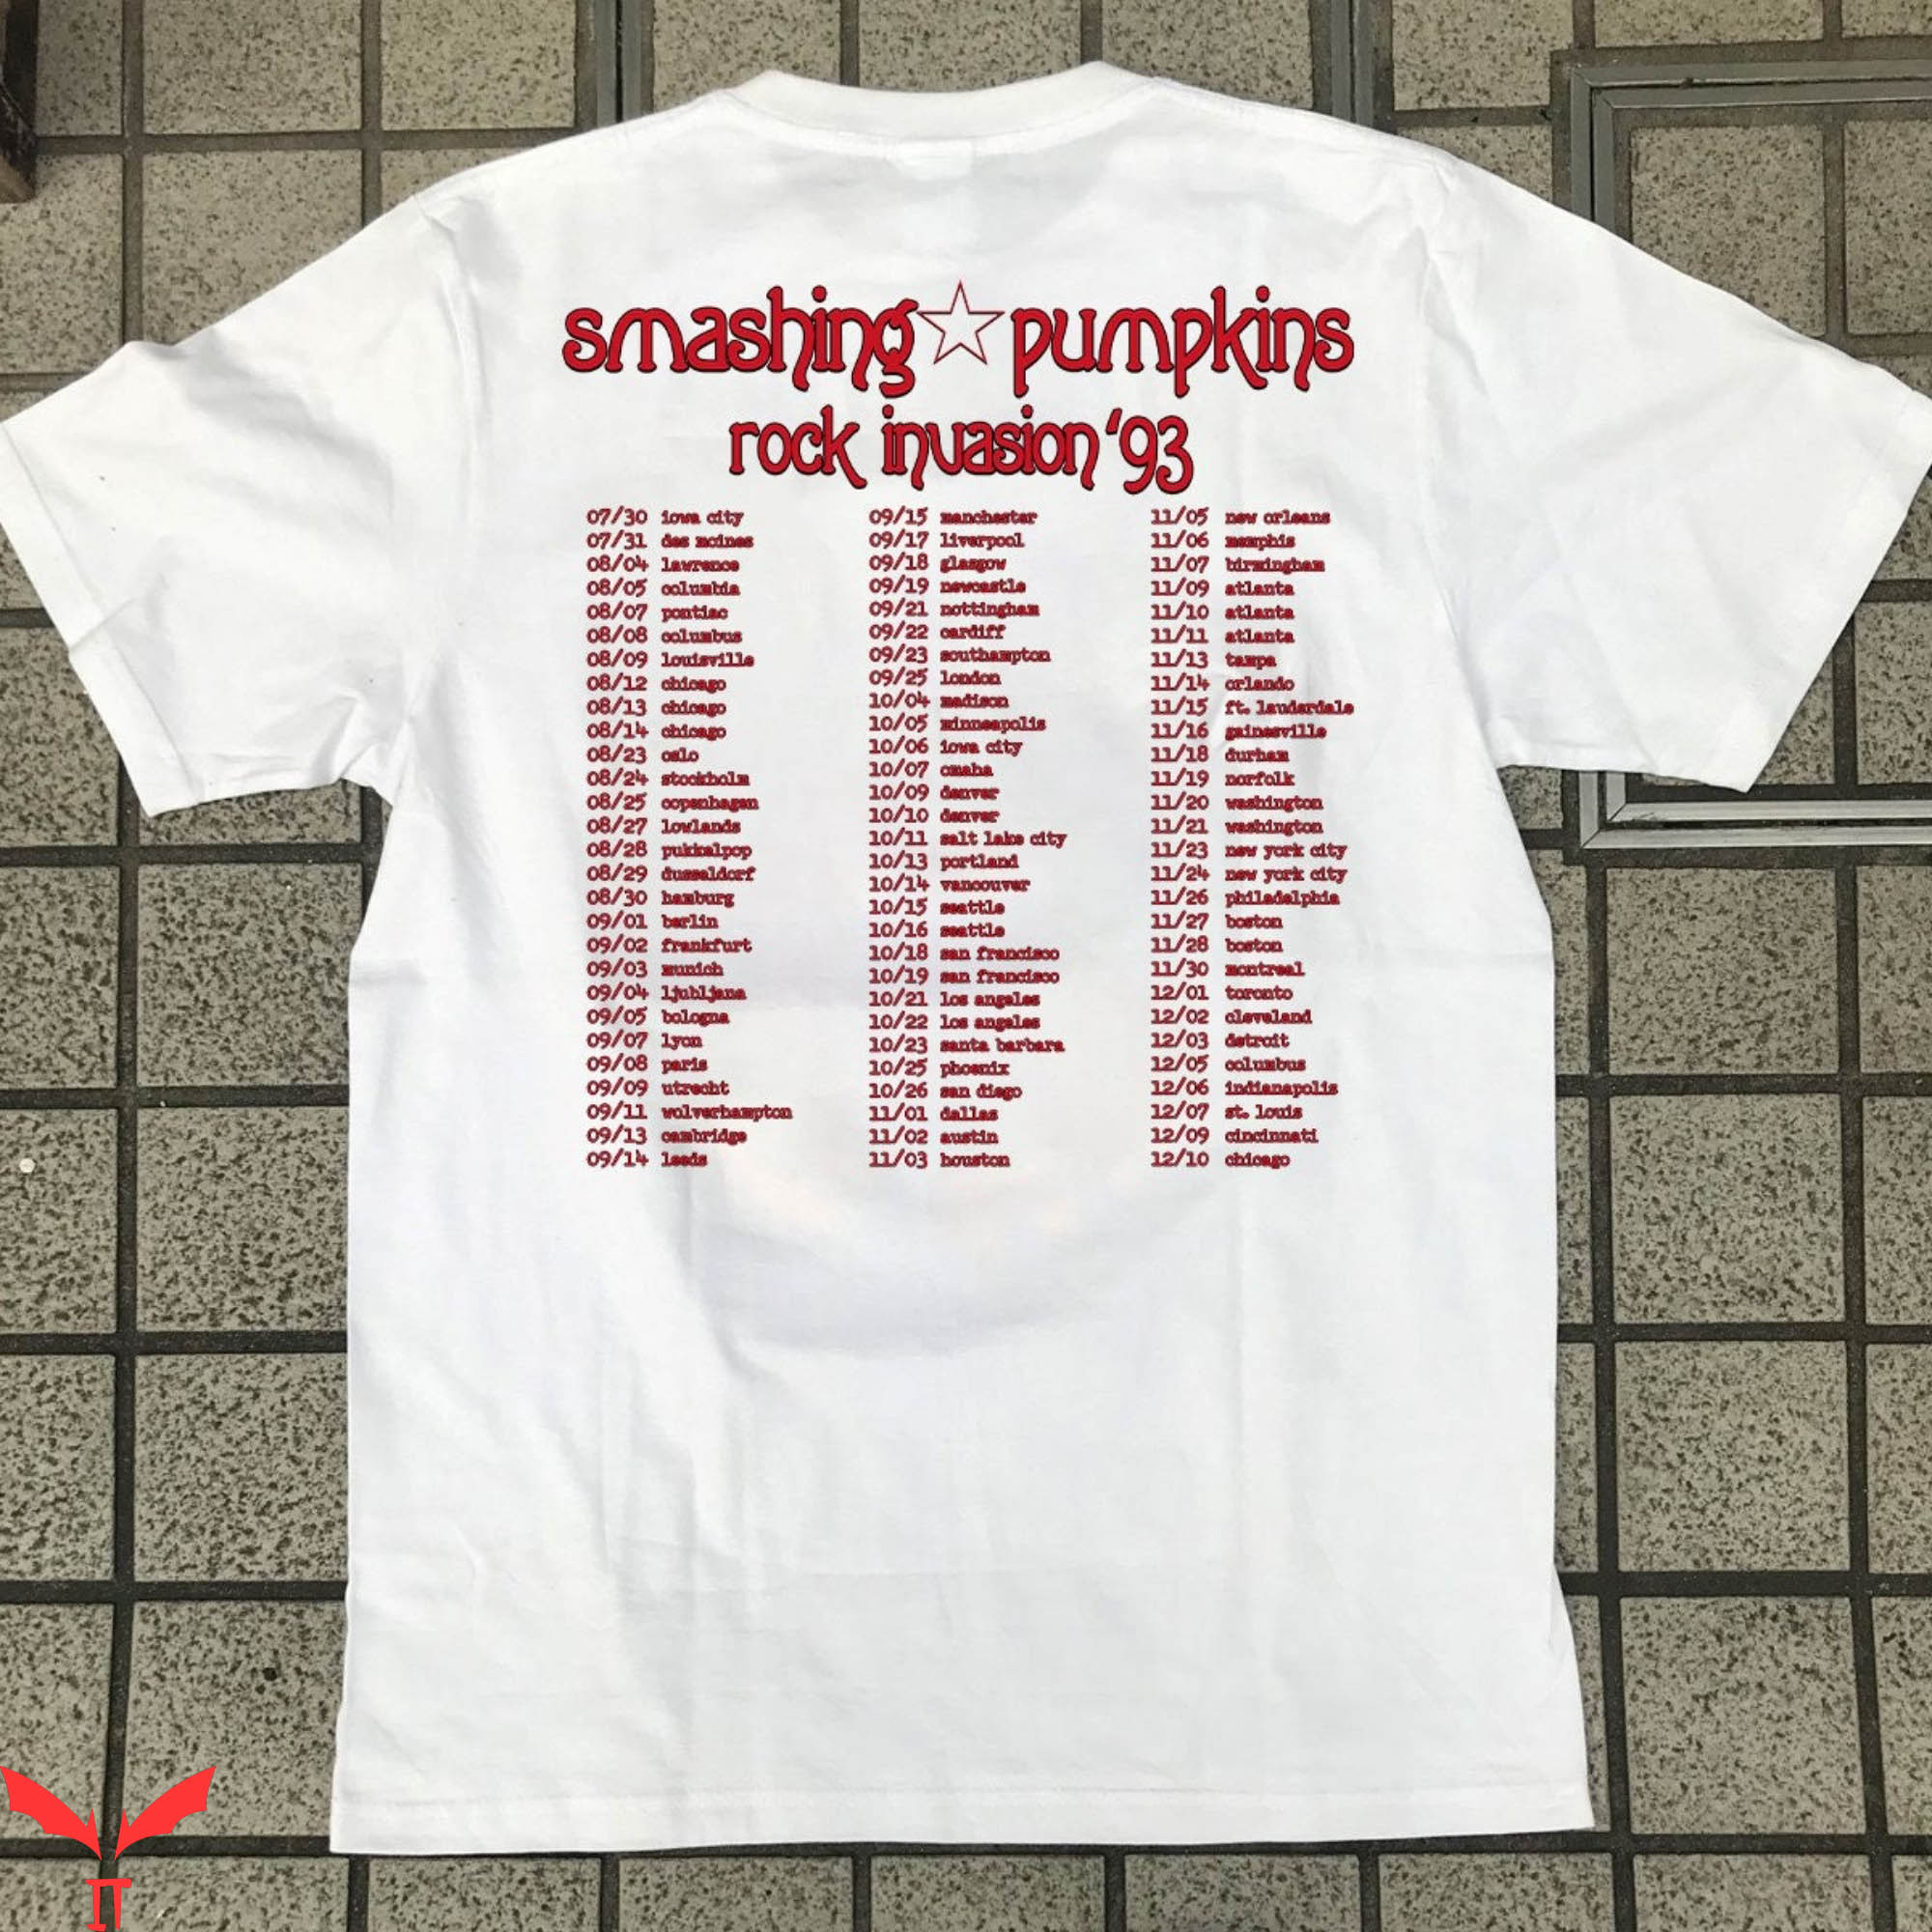 Siamese Dream T-Shirt Smashing Pumpkins Rock Invasion '93